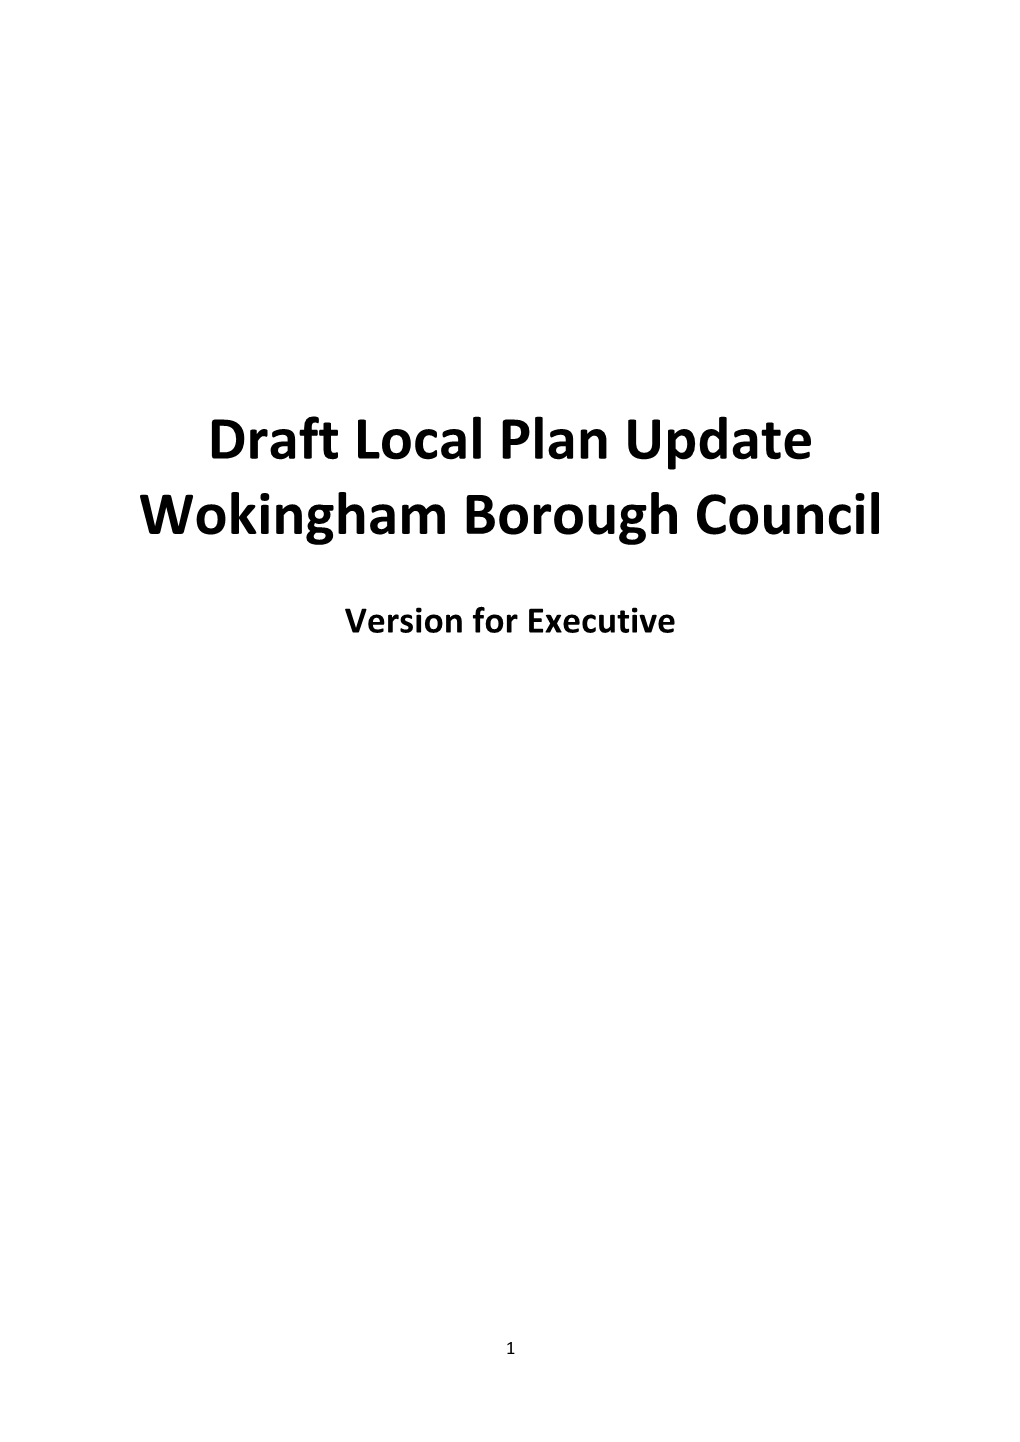 Draft Local Plan Update Wokingham Borough Council